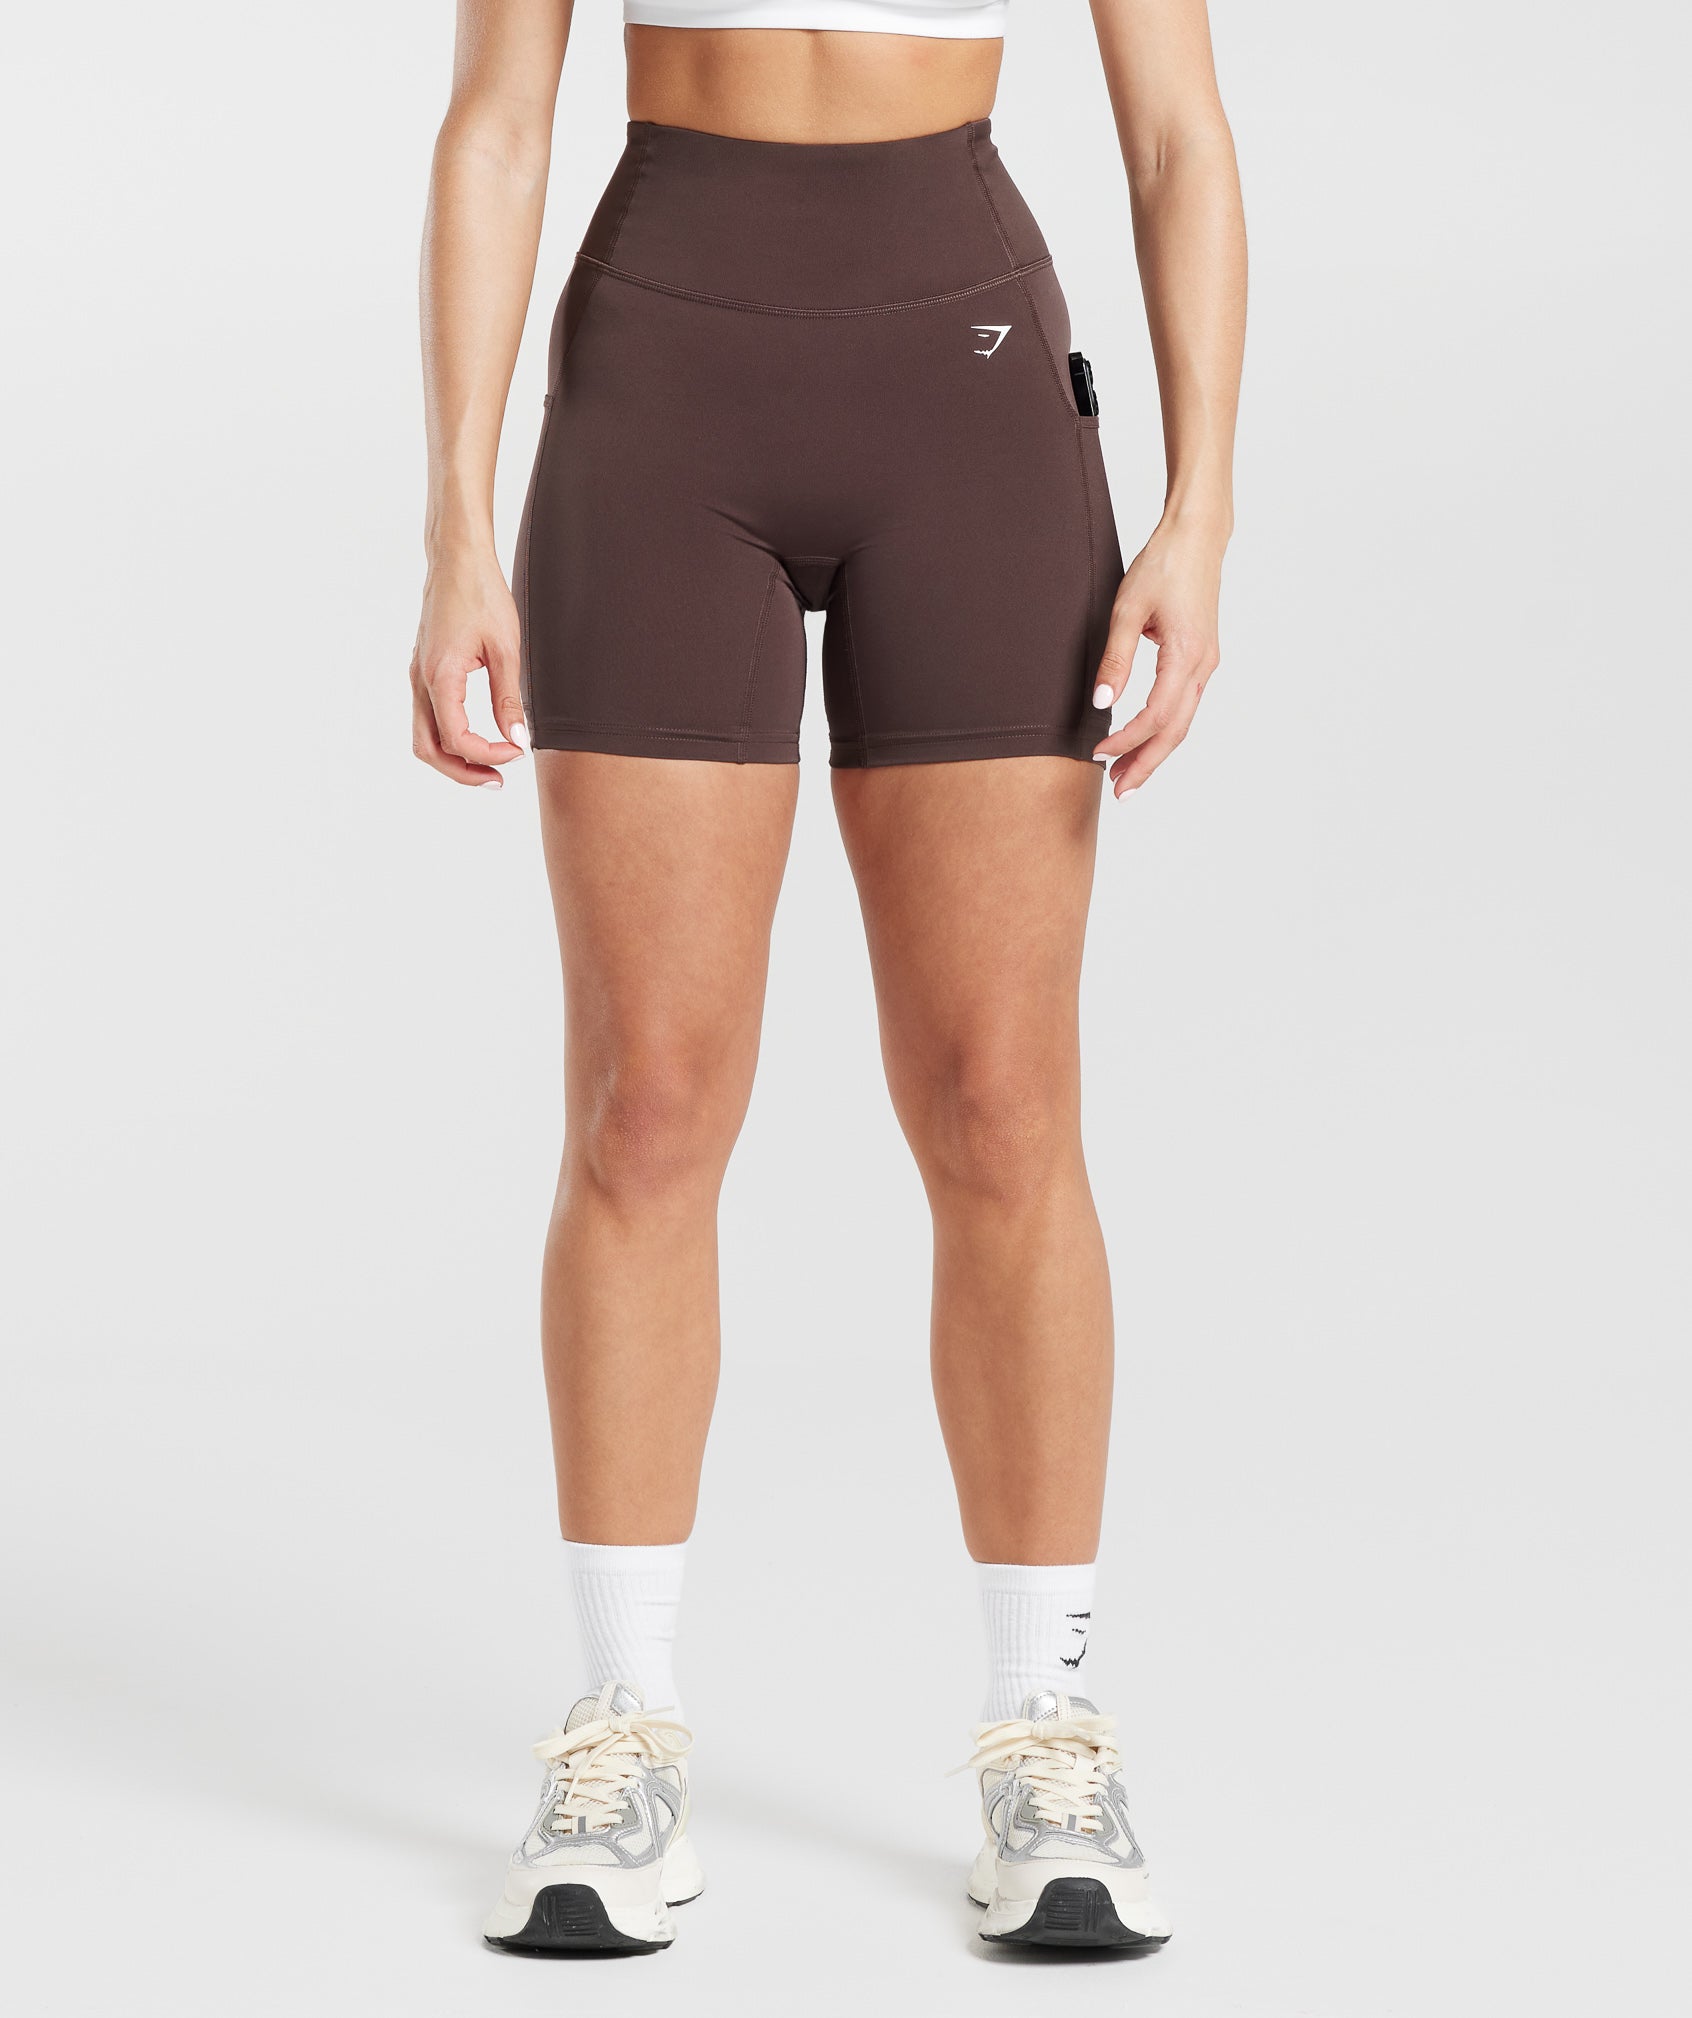 Women's Pocket Shorts & Gym Shorts with Pockets – Gymshark